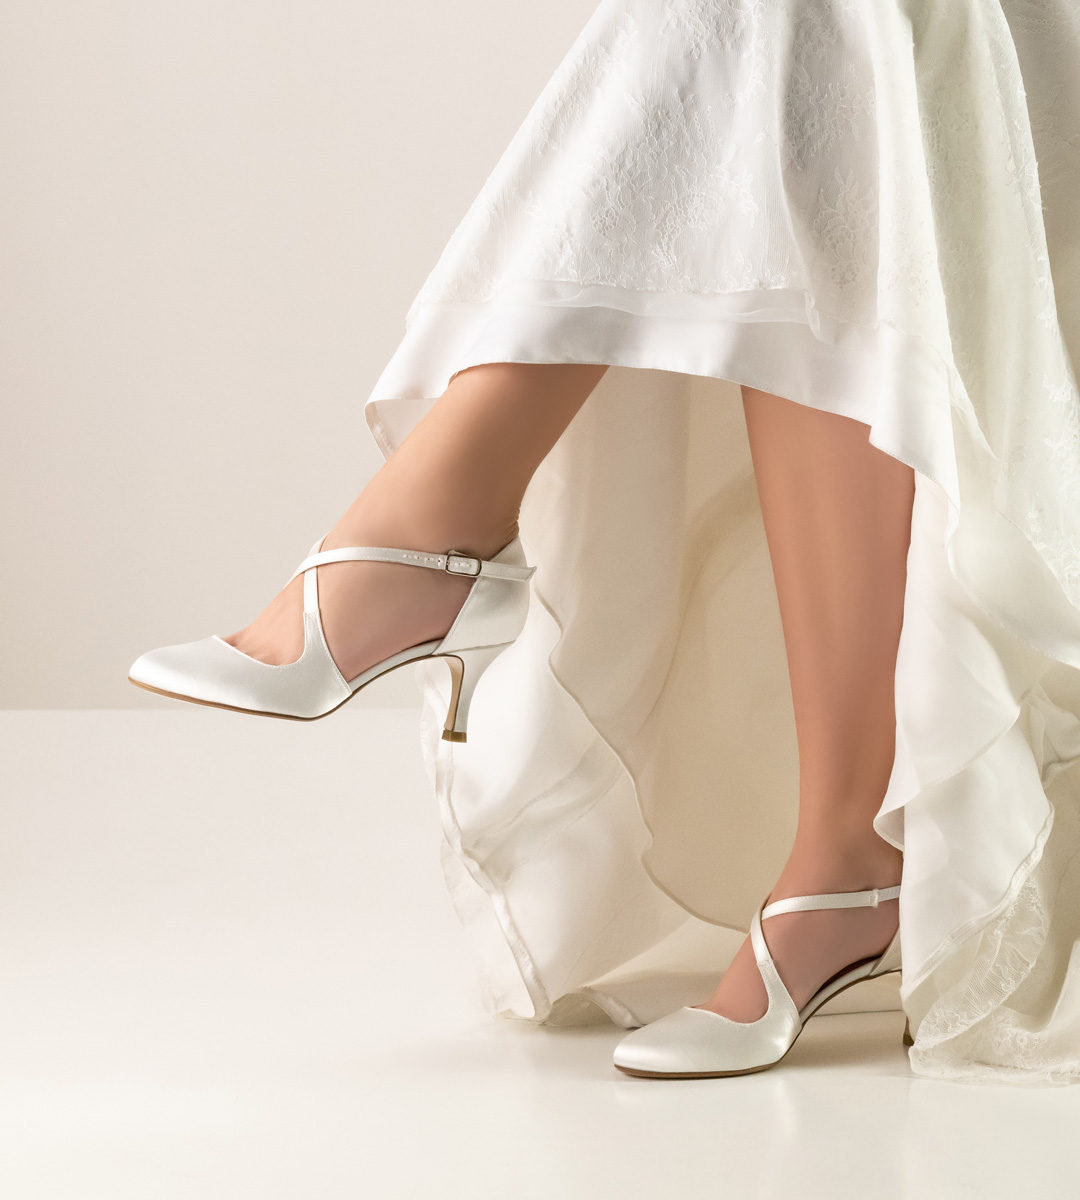 White wedding dress in combination with open Nueva Epoca bridal shoe